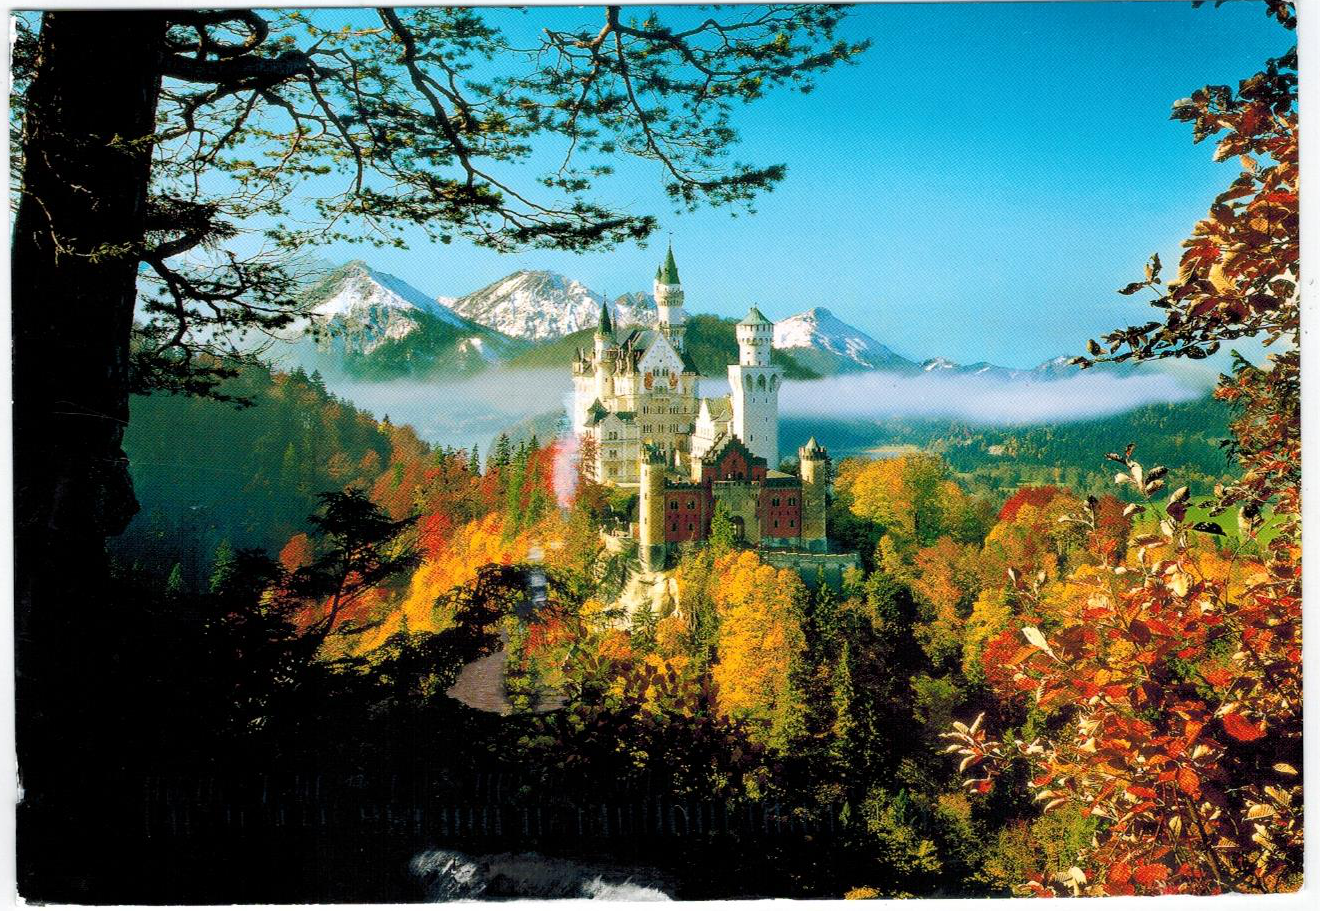 Germany Postcard